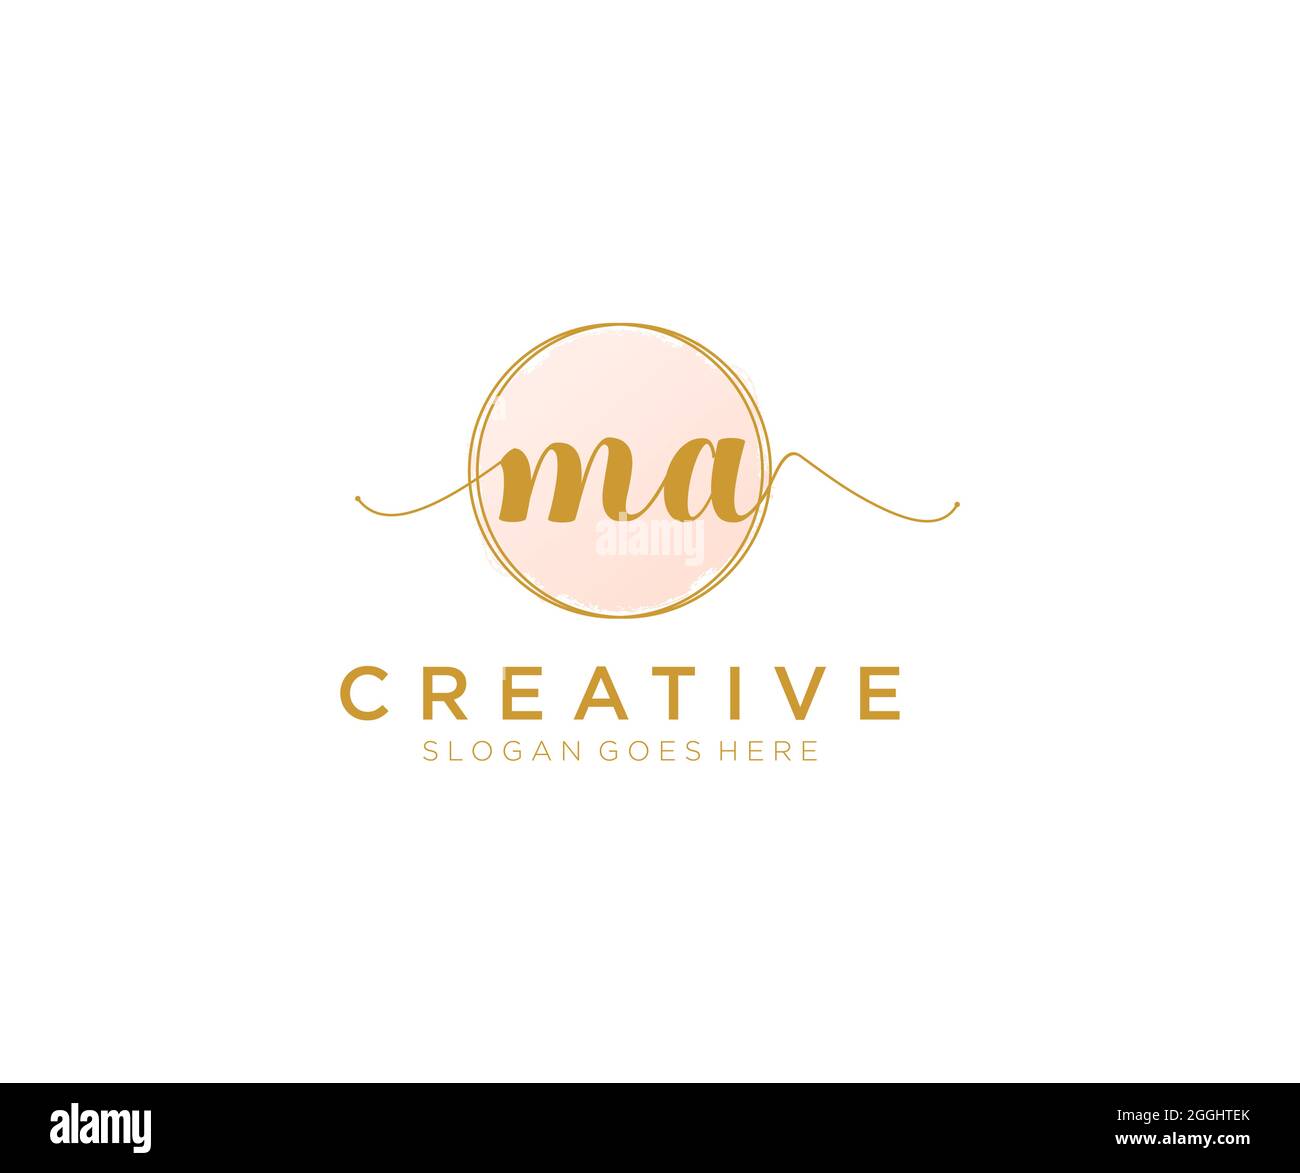 Elegant Letter M Monogram Design Luxury Black And White Interweaving Lines  Linear Creative Mm Wedding Card Emblem Stock Illustration - Download Image  Now - iStock